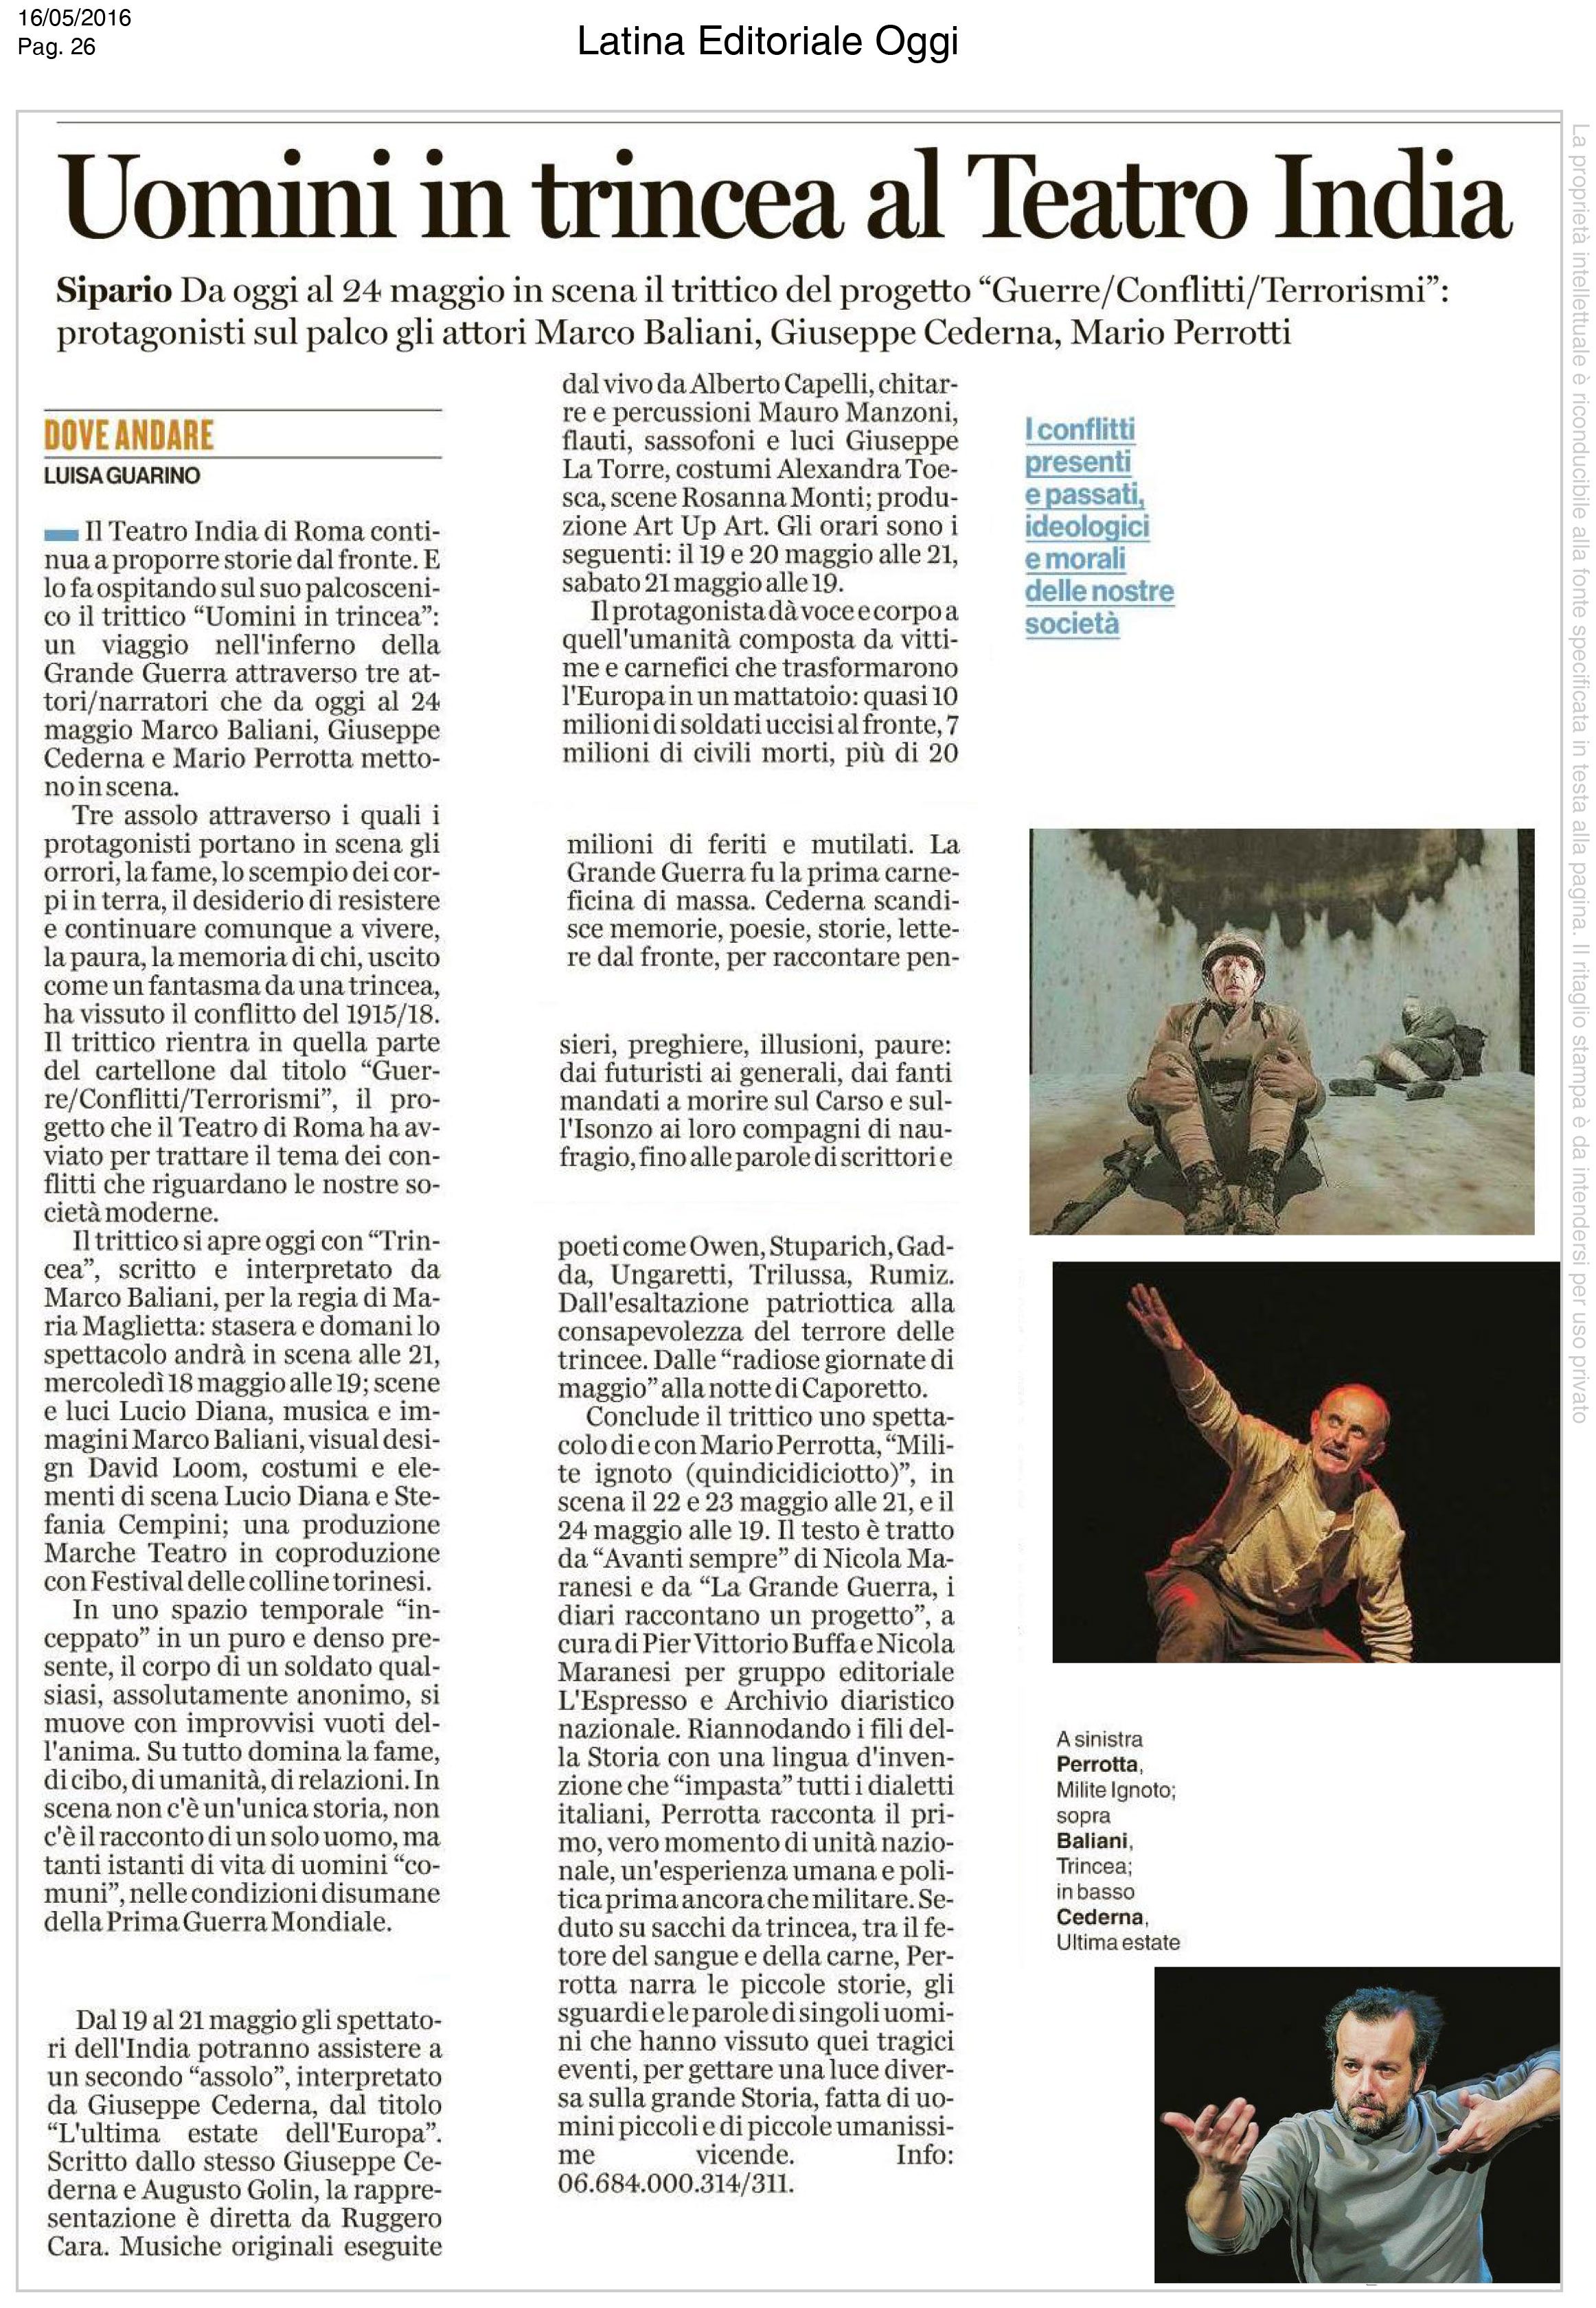 2016_05_16_-latina-editoriale-oggi_-uomini-in-trincea-al-Teatro-India-1